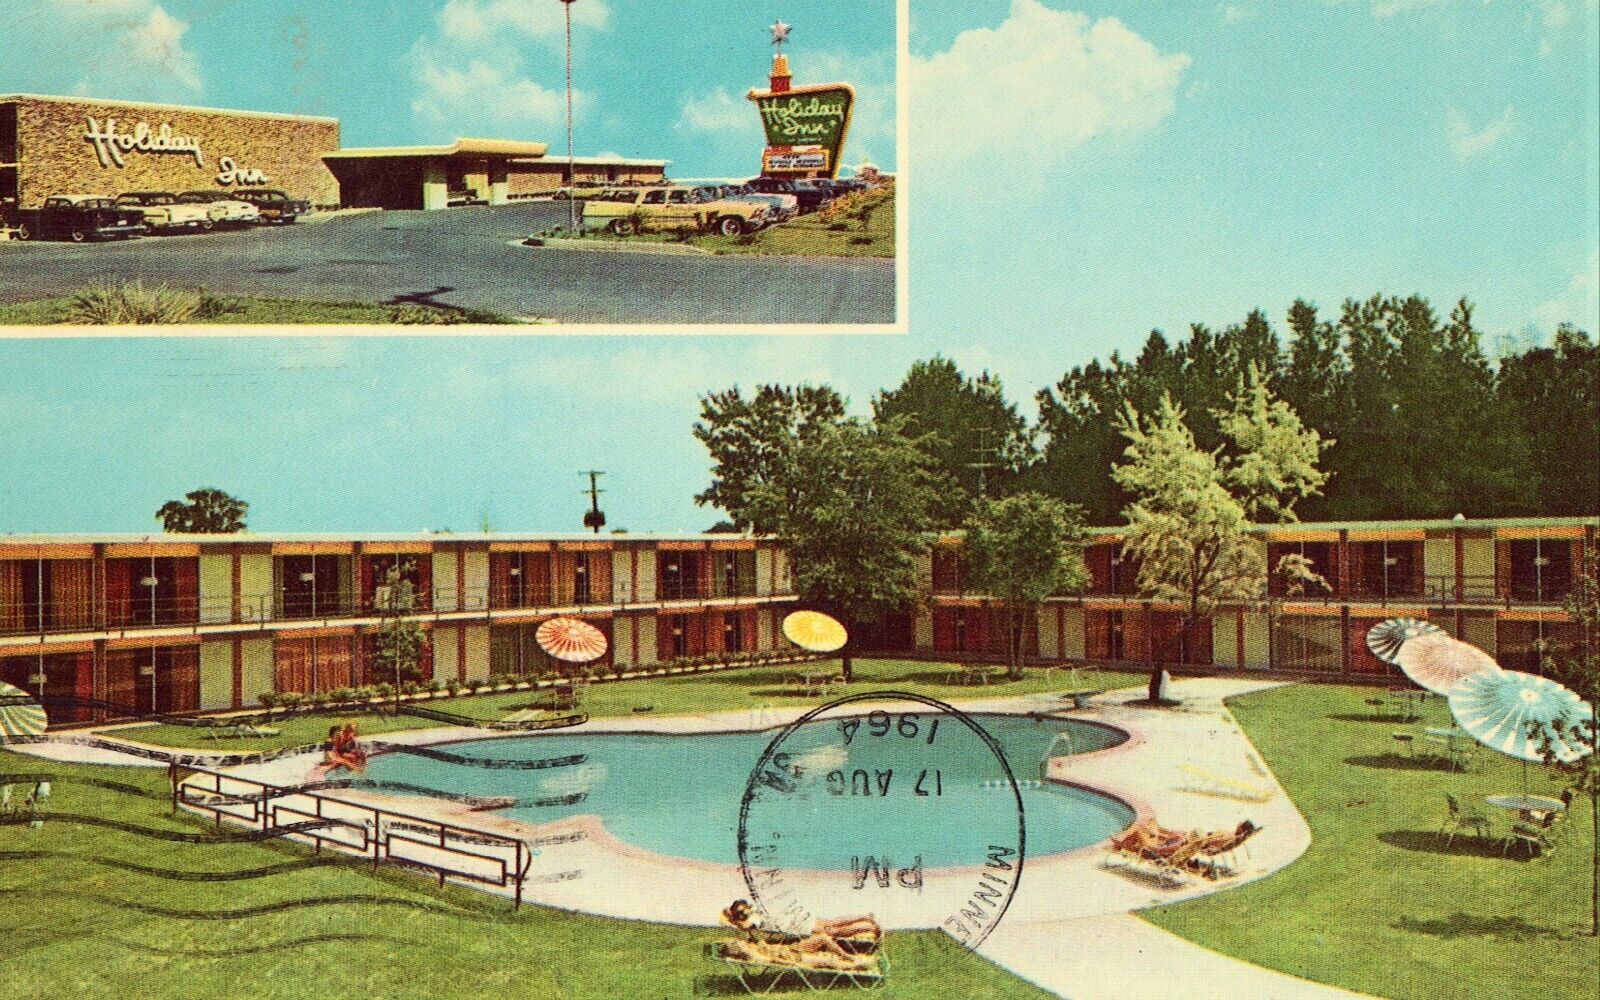 Holiday Inn - Sioux Falls, South Dakota Vintage Postcard